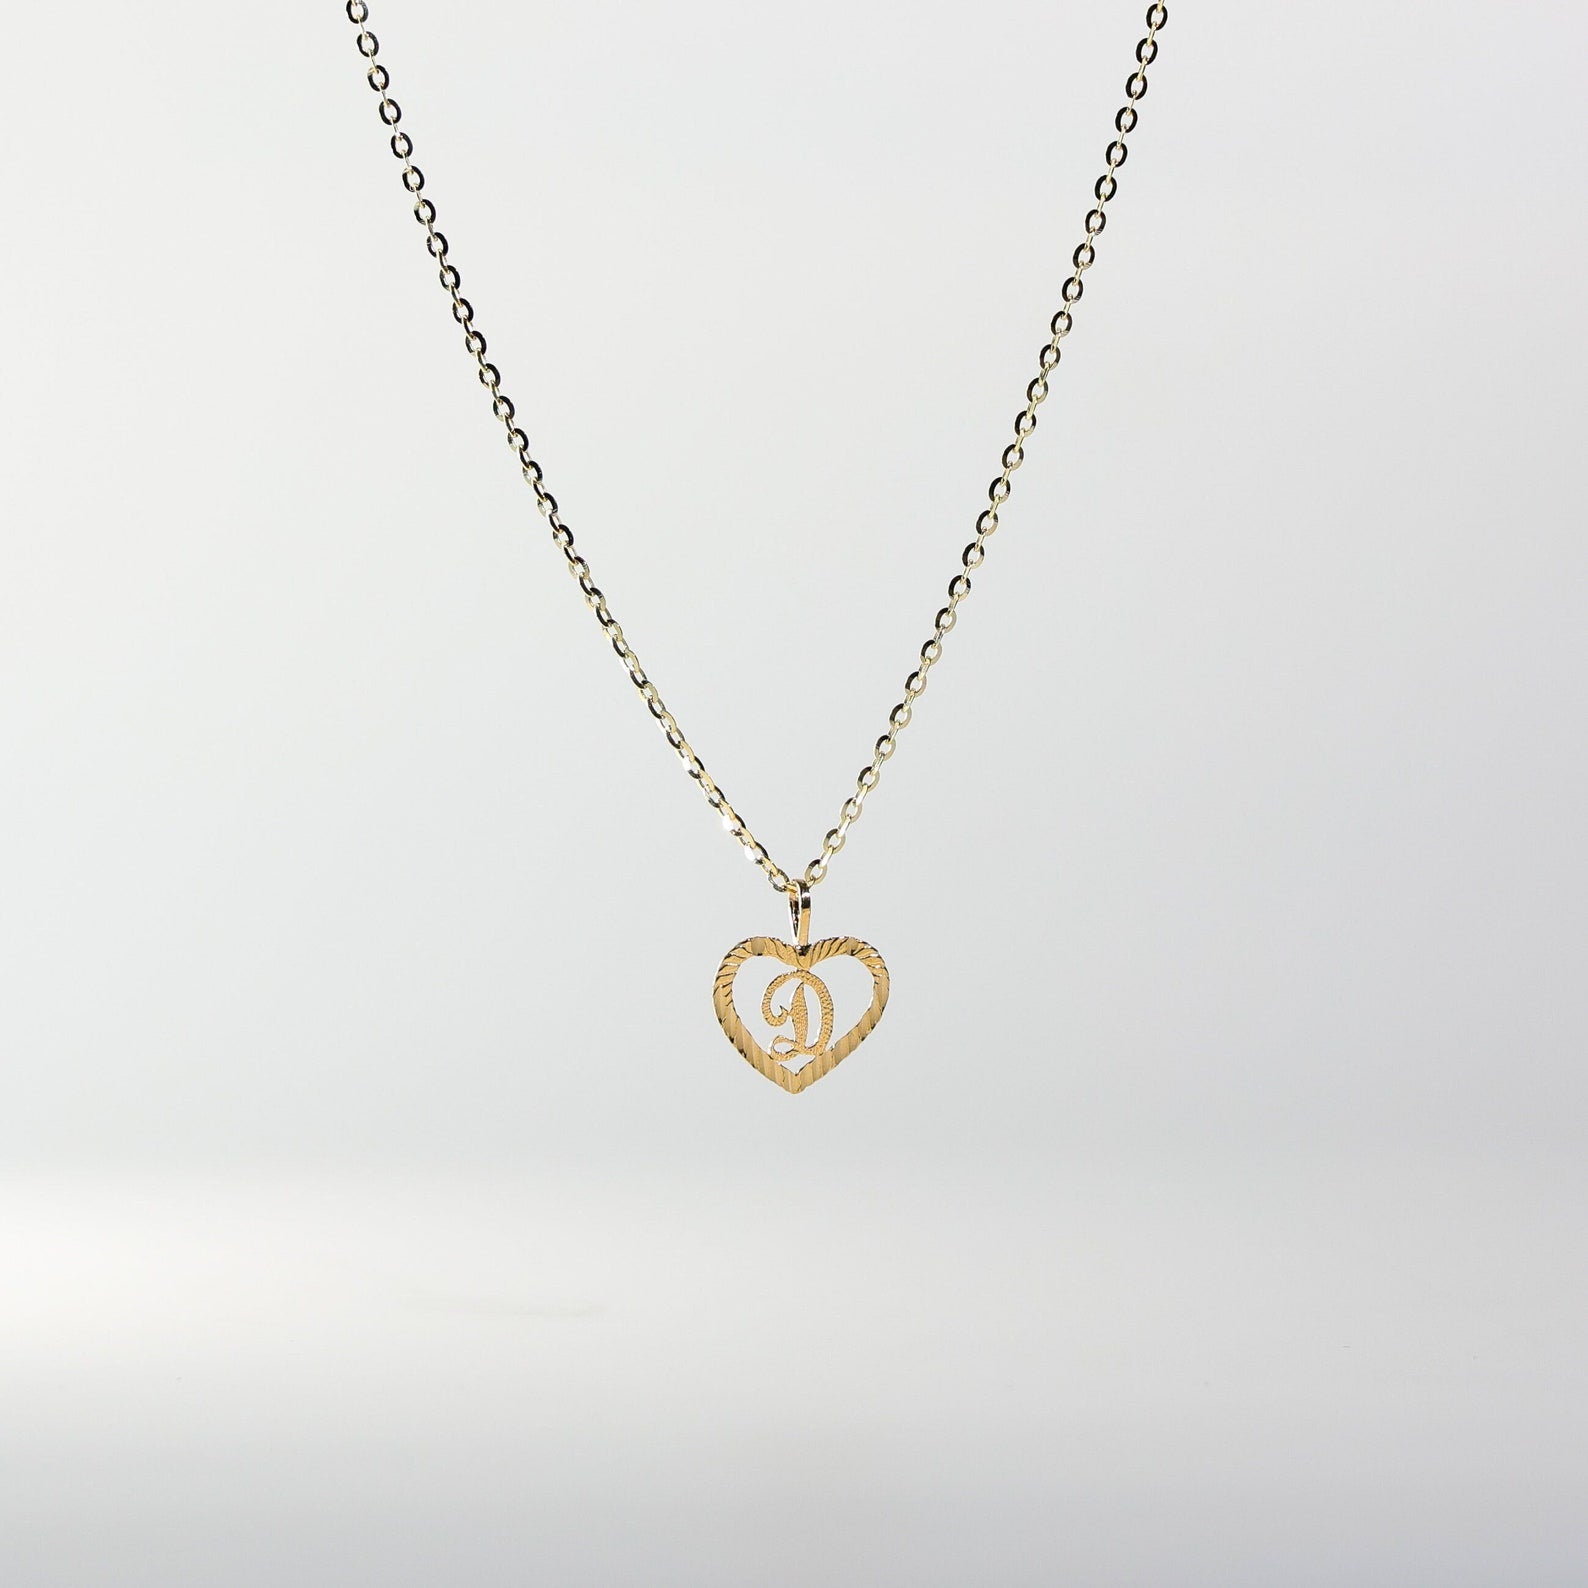 Gold Heart-Shaped Letter D Pendant | A-Z Pendants - Charlie & Co. Jewelry